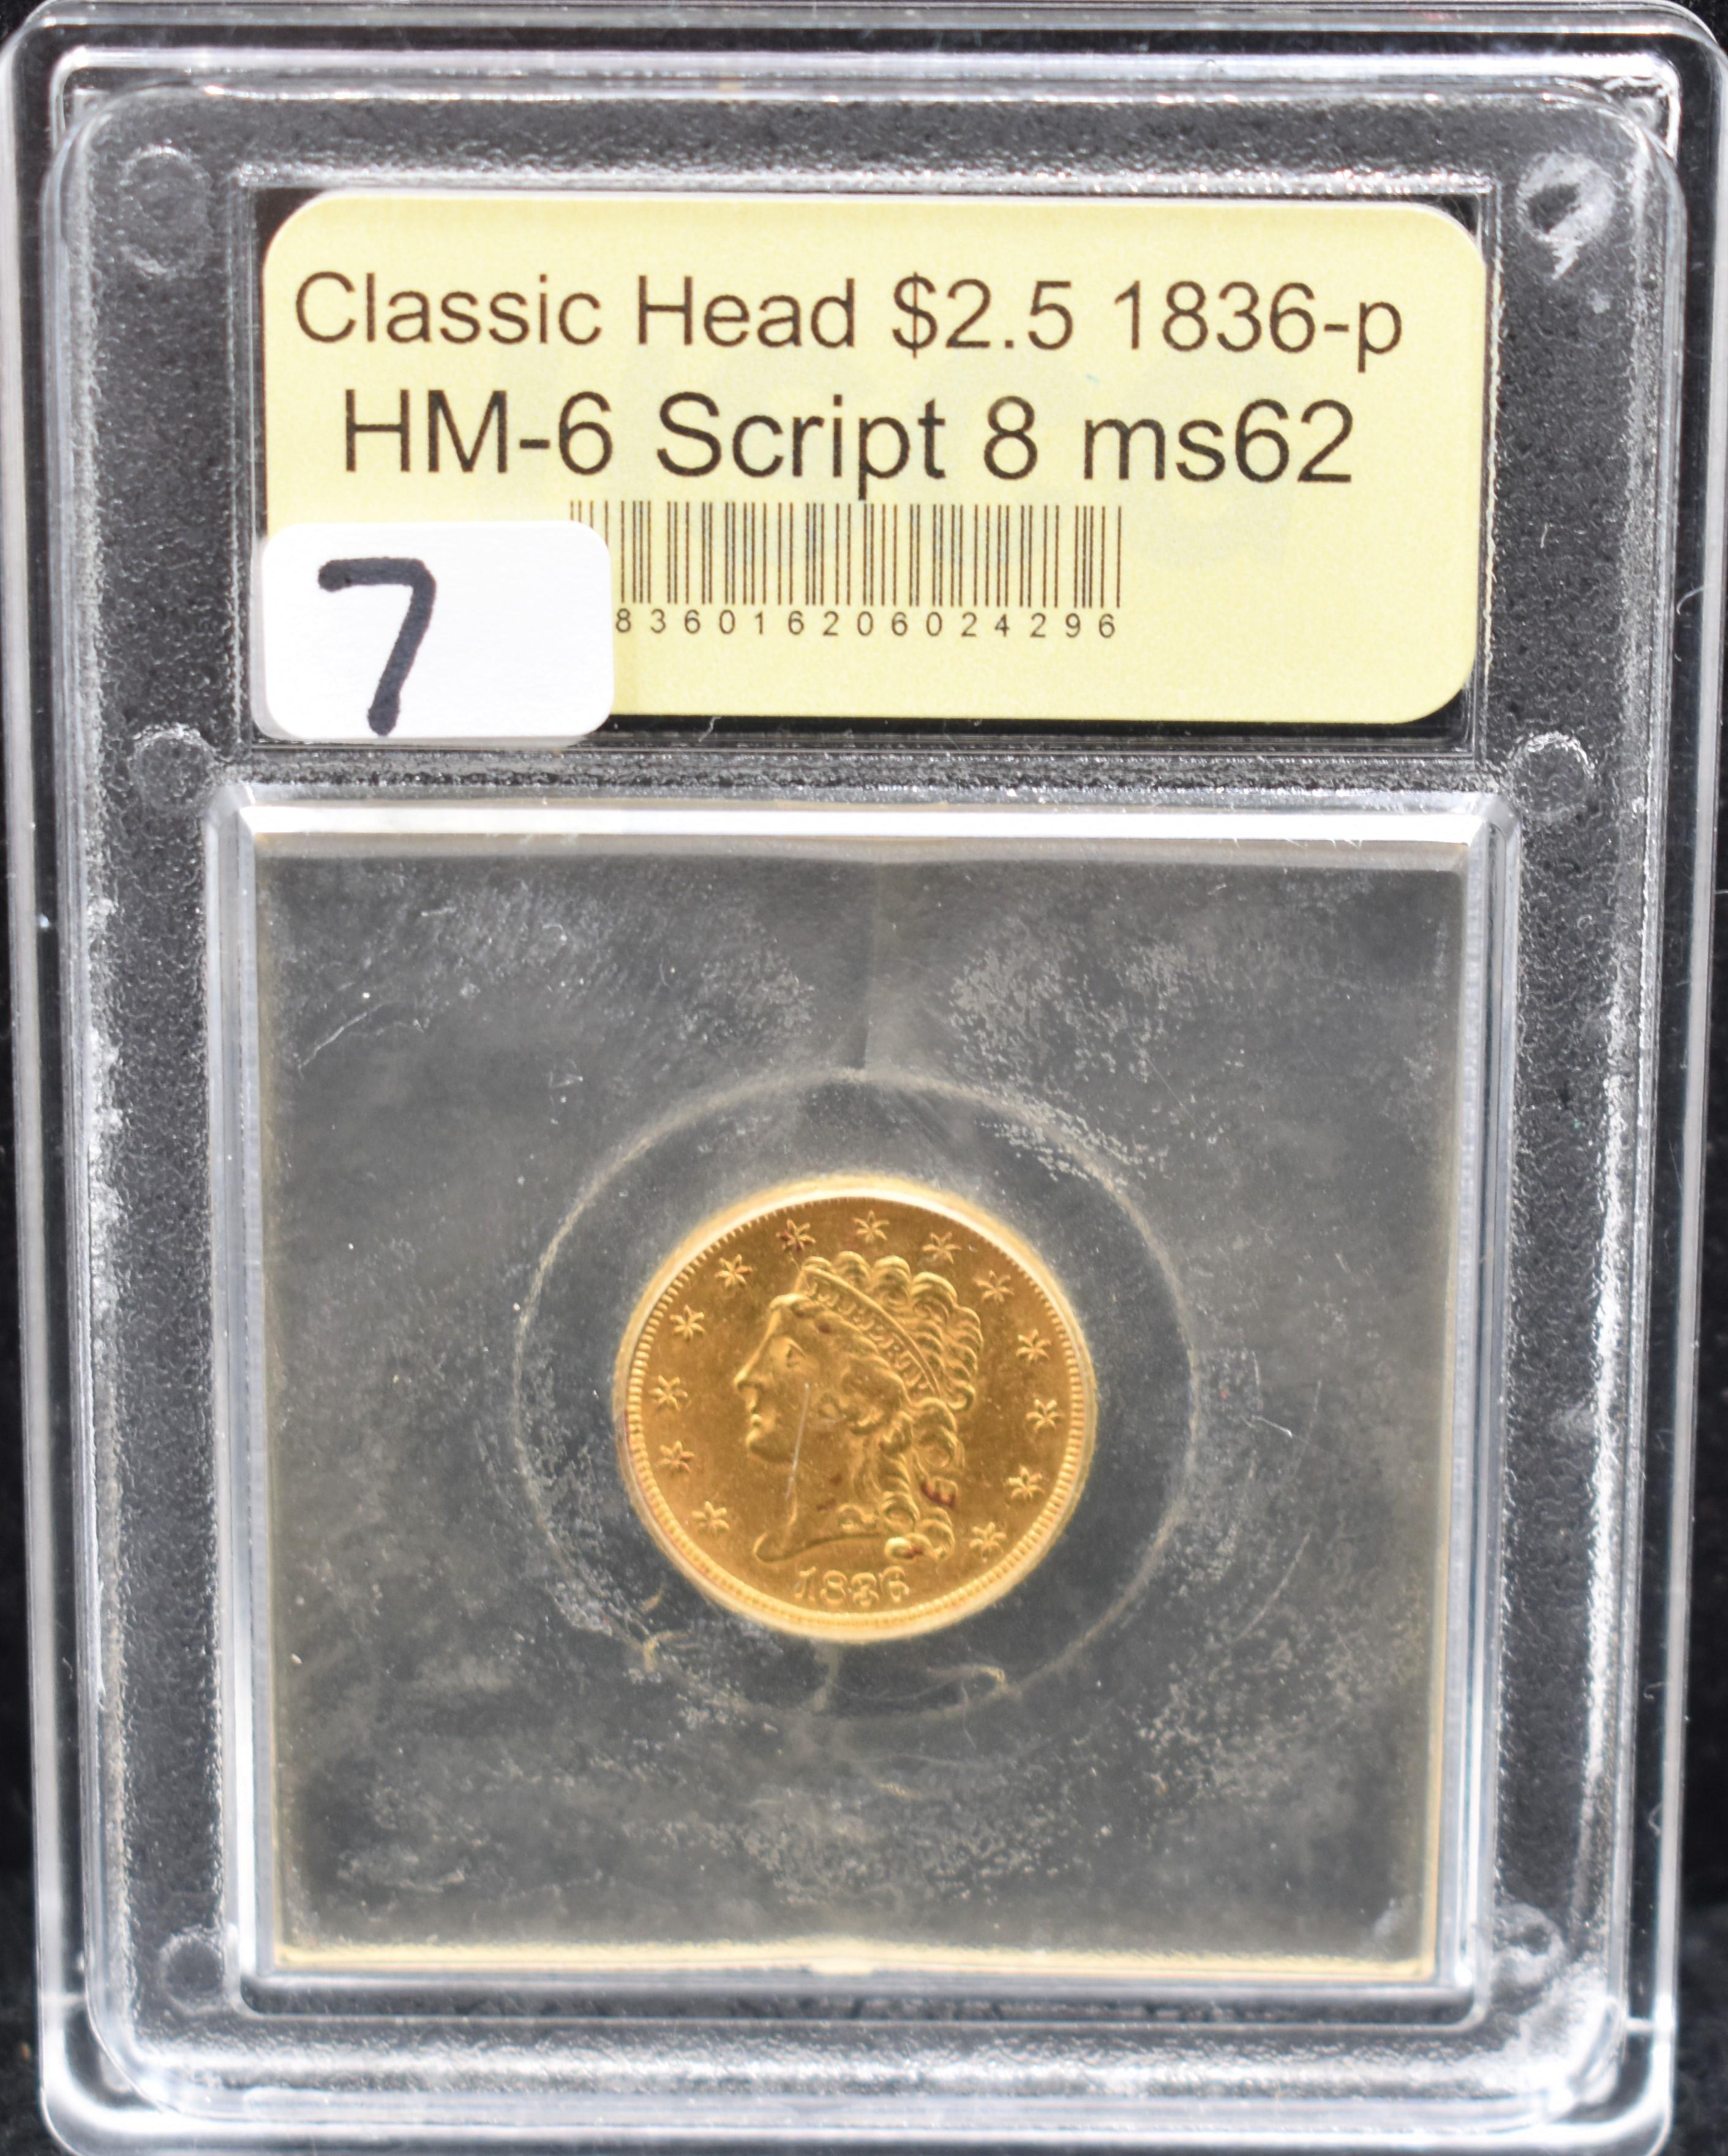 1836 $2 1/2 SCRIPT 8 CLASSIC HEAD GOLD USCG MS62